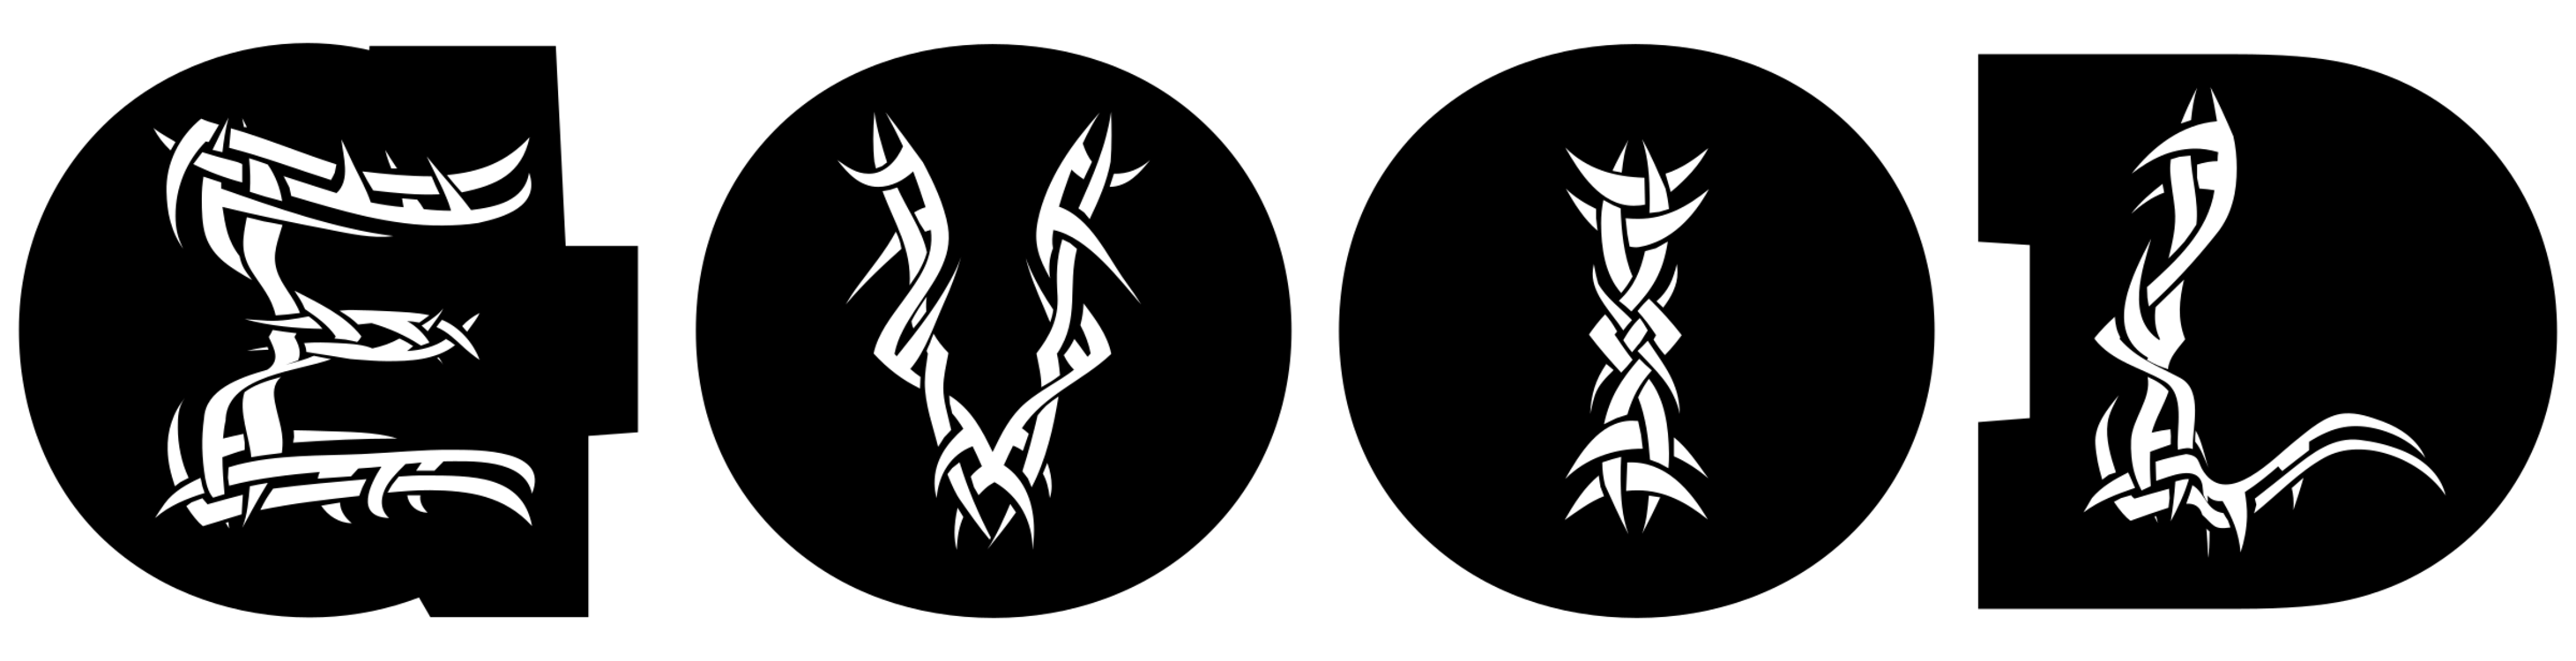 Logo,Symbol,Automotive Decal